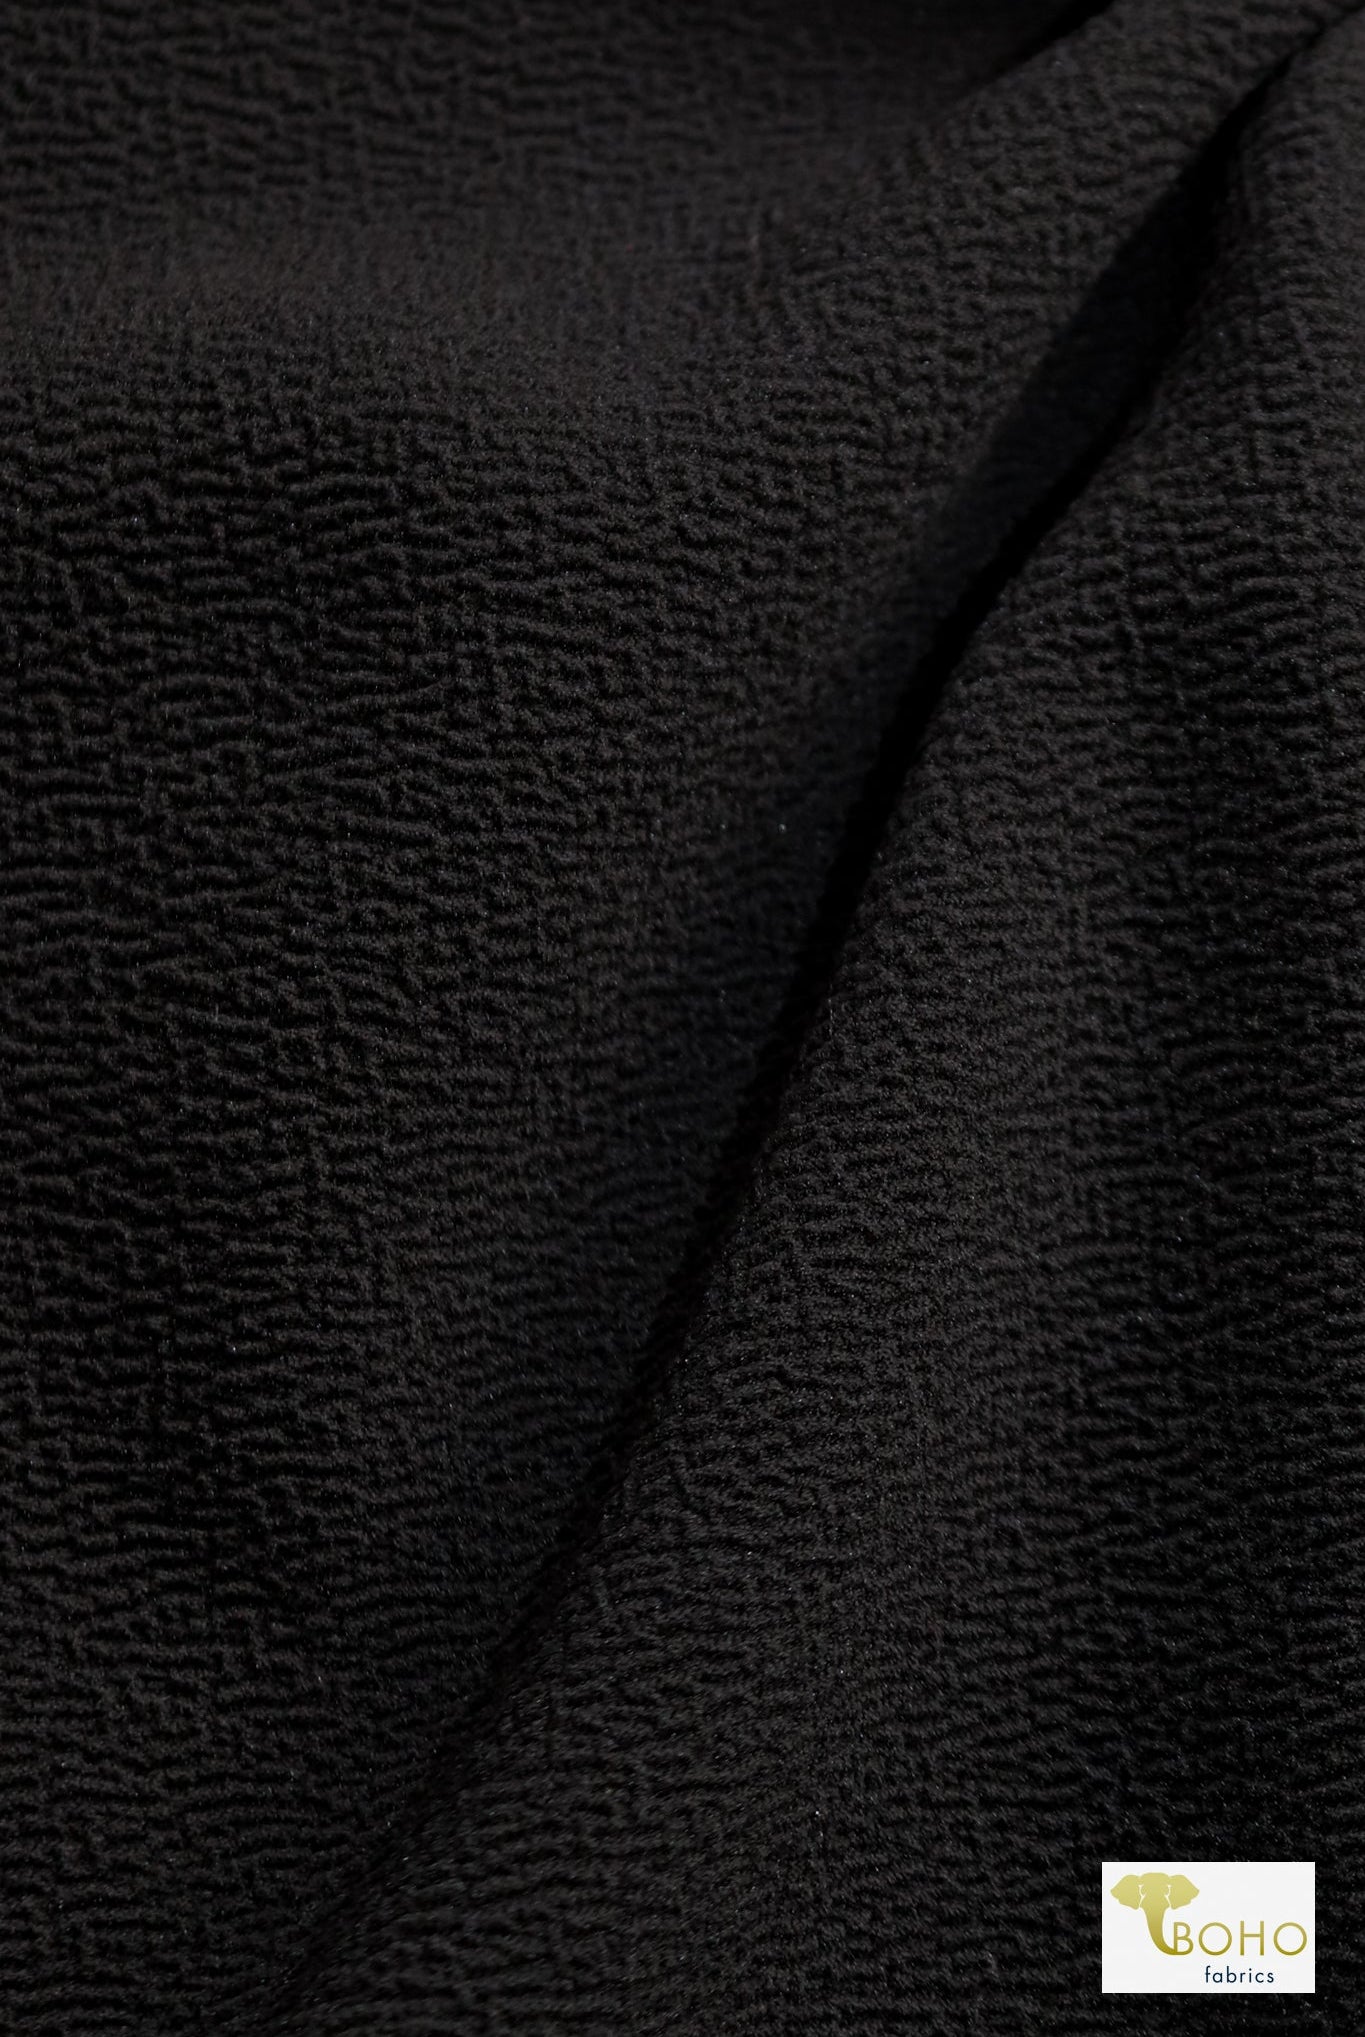 Black, Liverpool Knit Fabric - Boho Fabrics